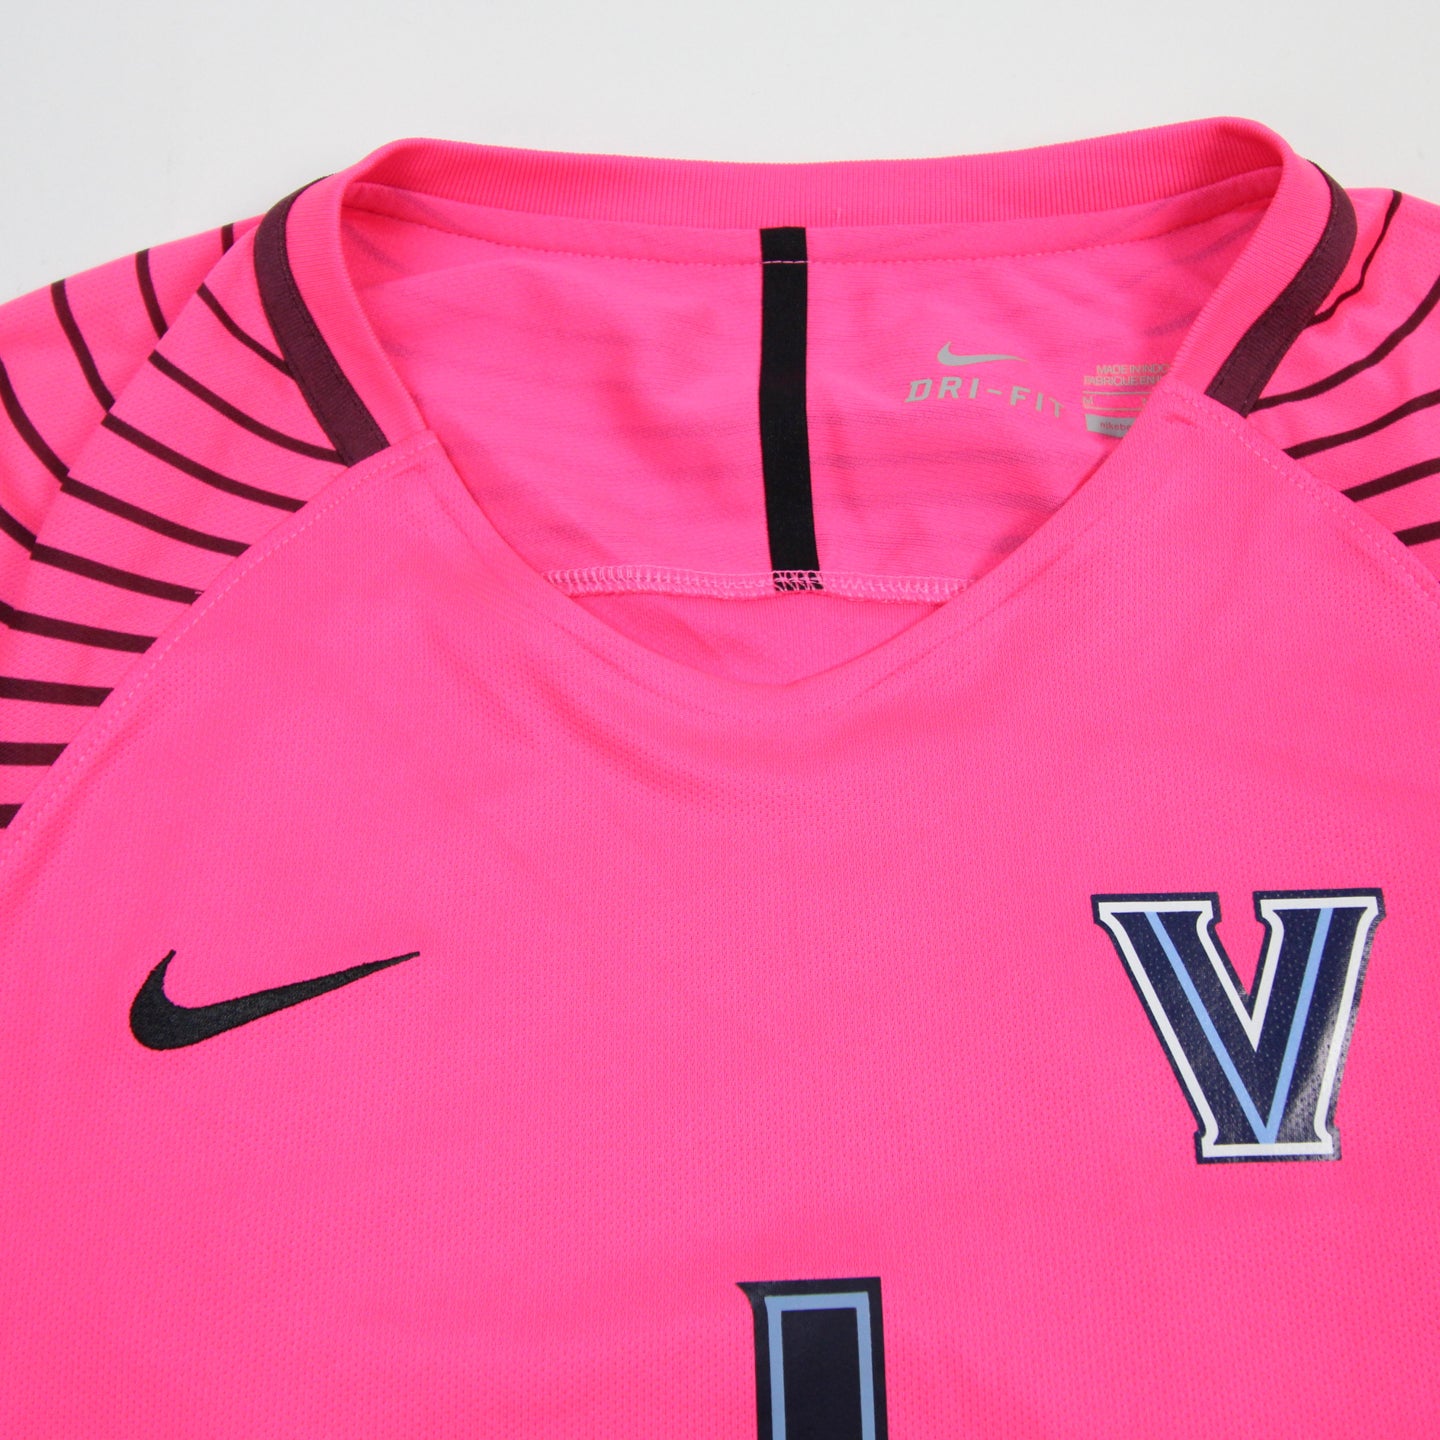 Villanova Wildcats soccer jersey